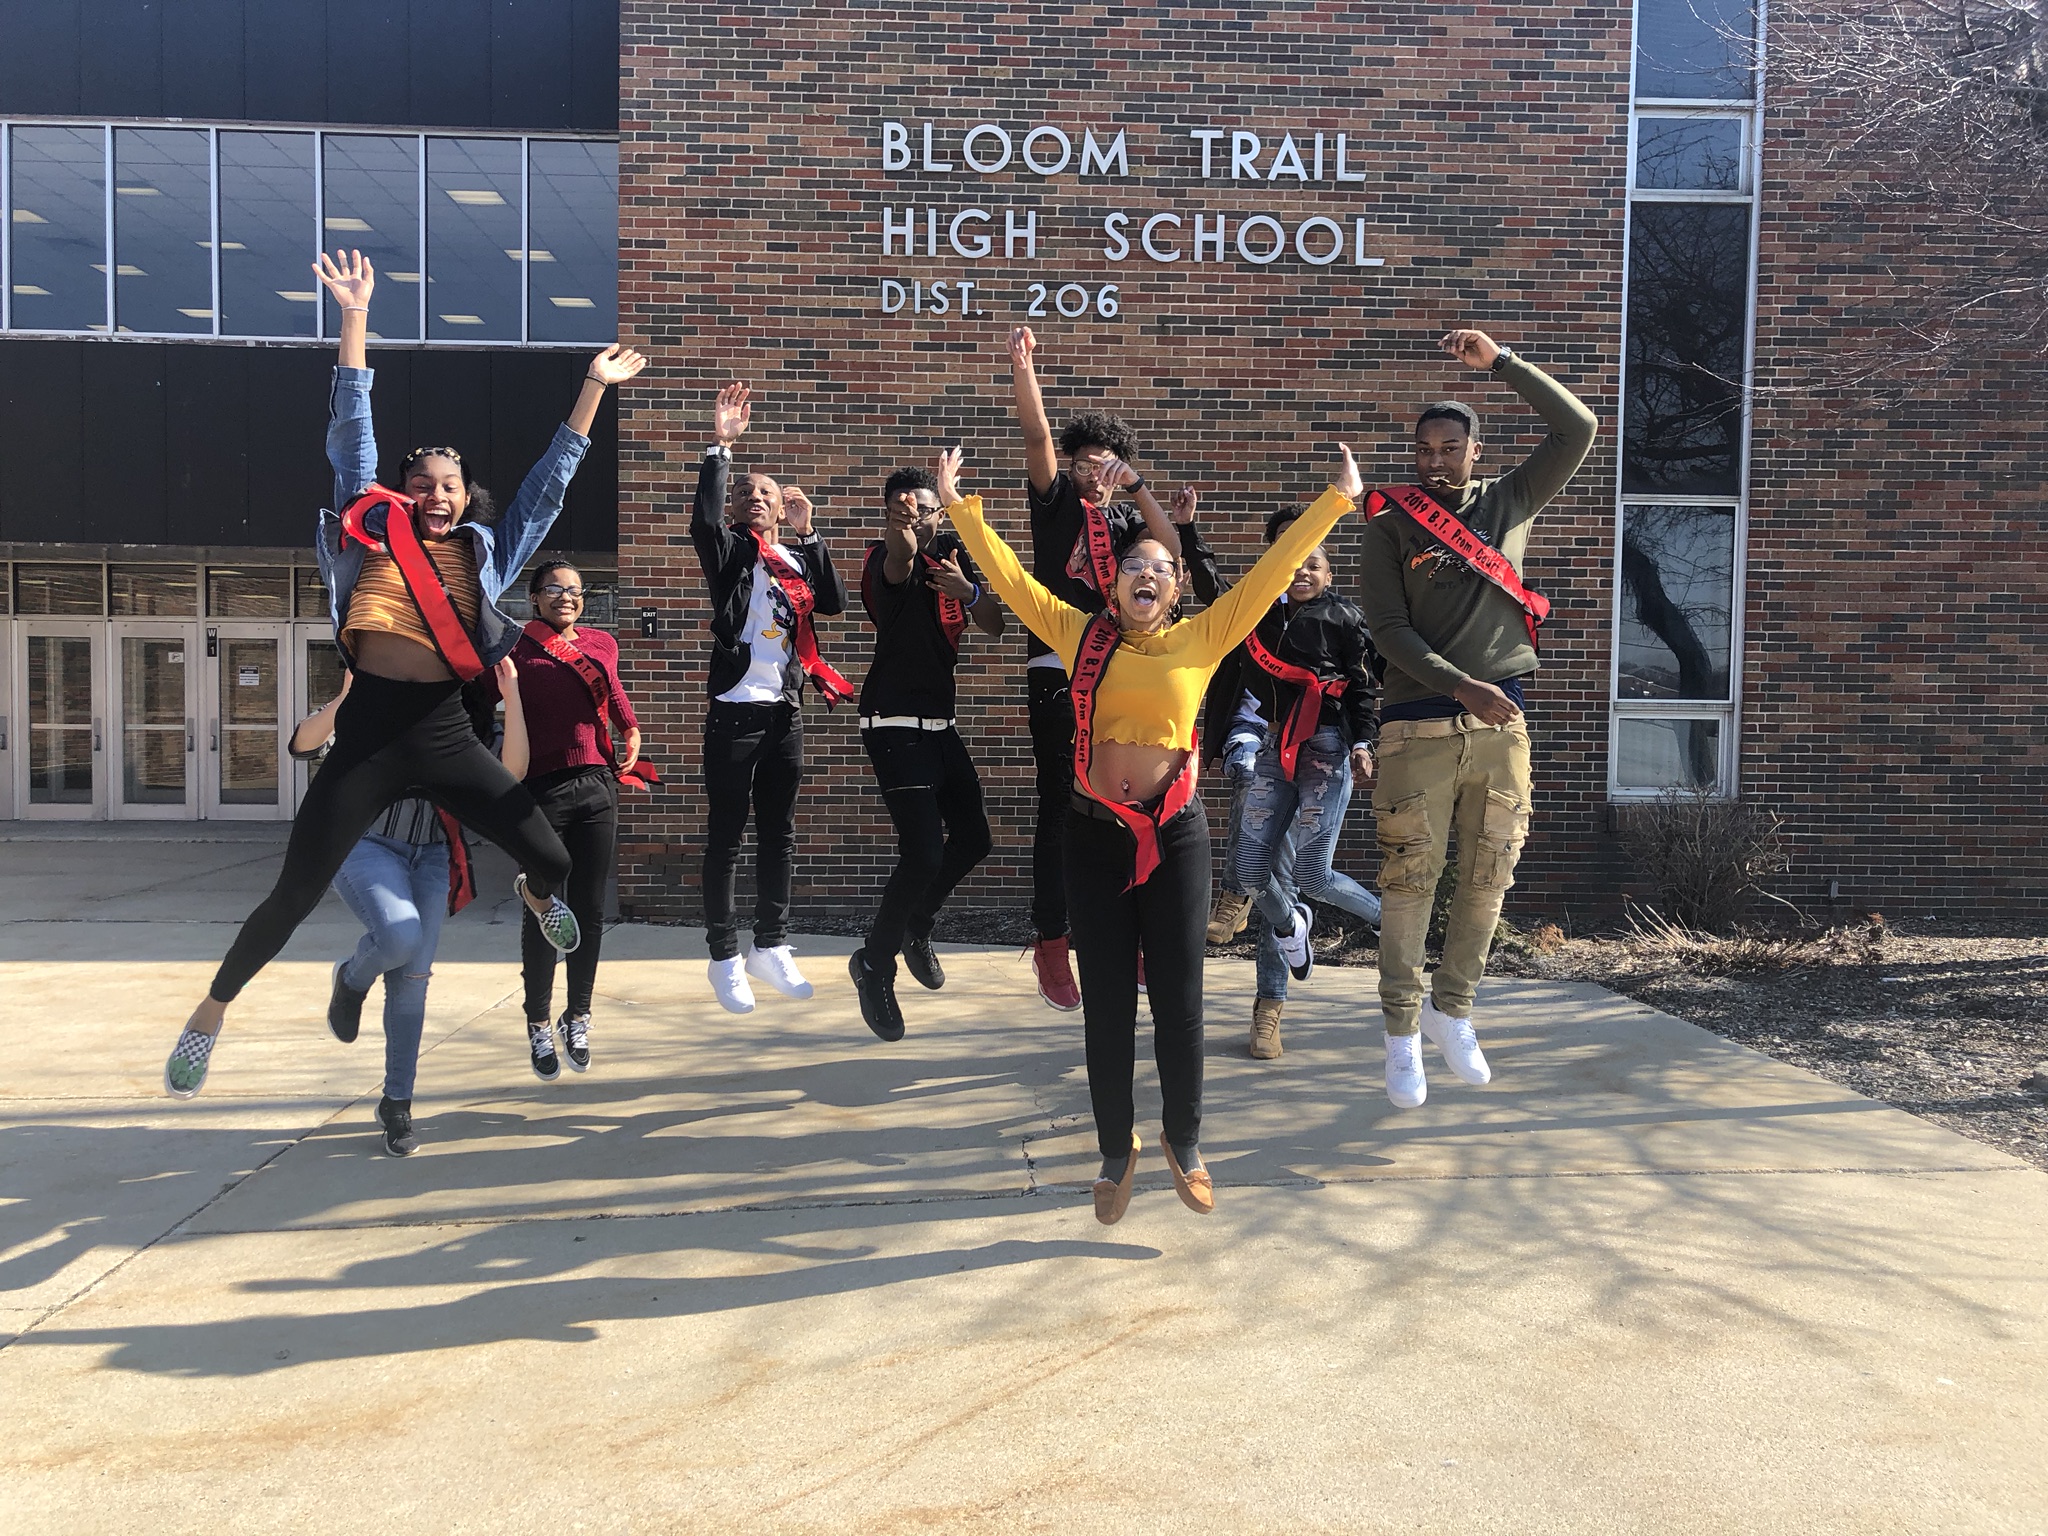 Bloom Trail High School Trail Dance Central